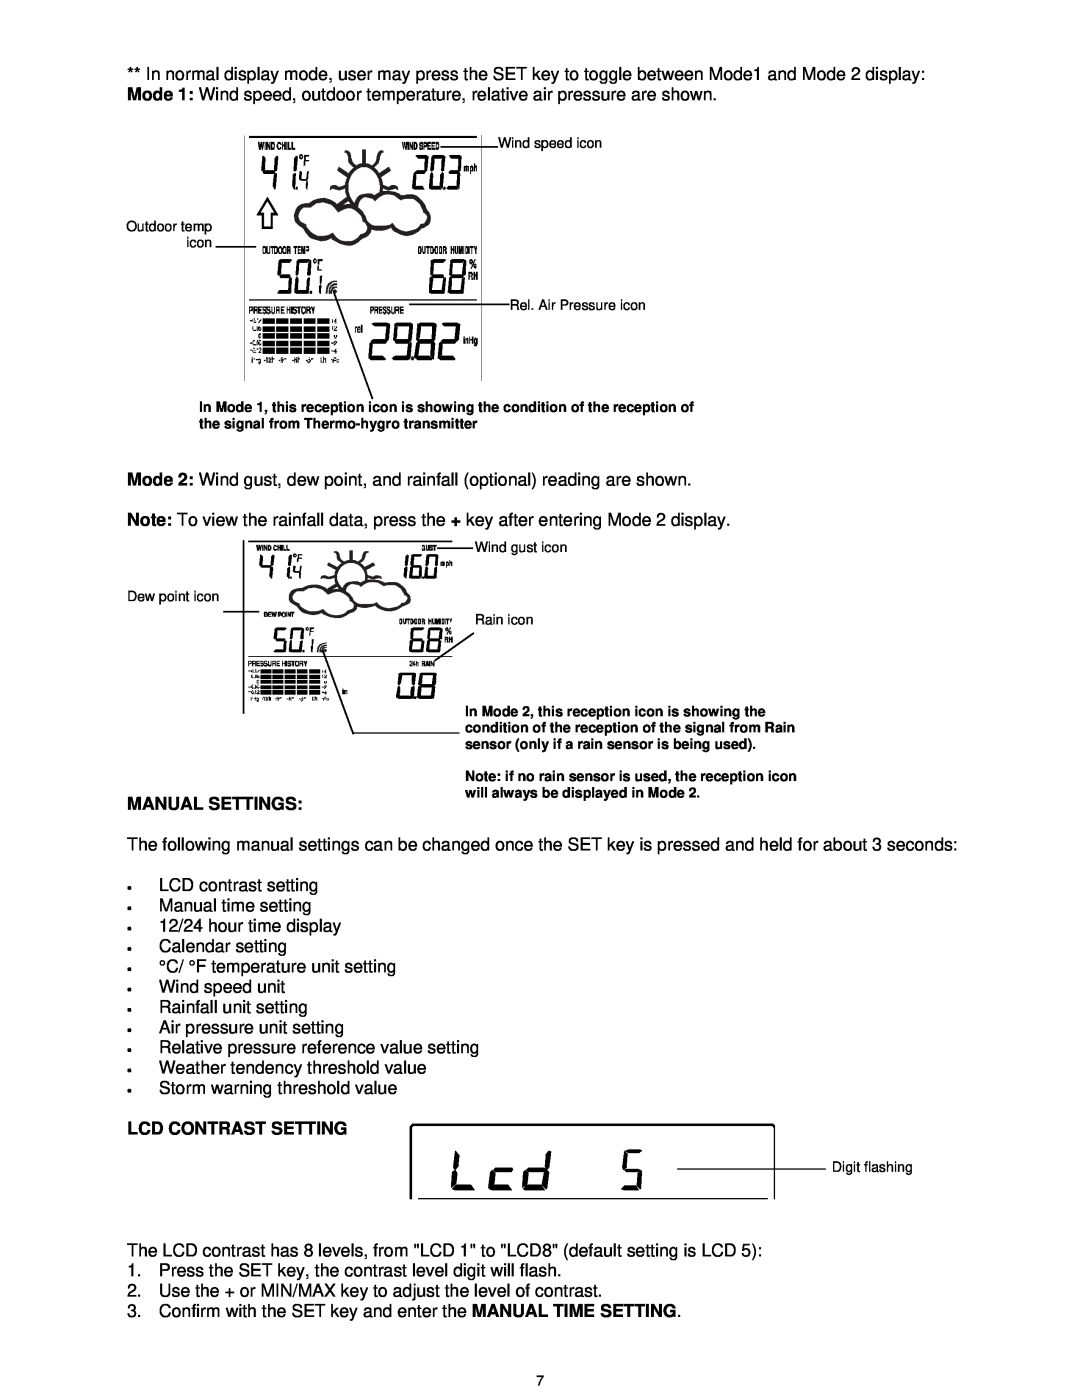 La Crosse Technology WS-1913U-IT manual Manual Settings, Lcd Contrast Setting 